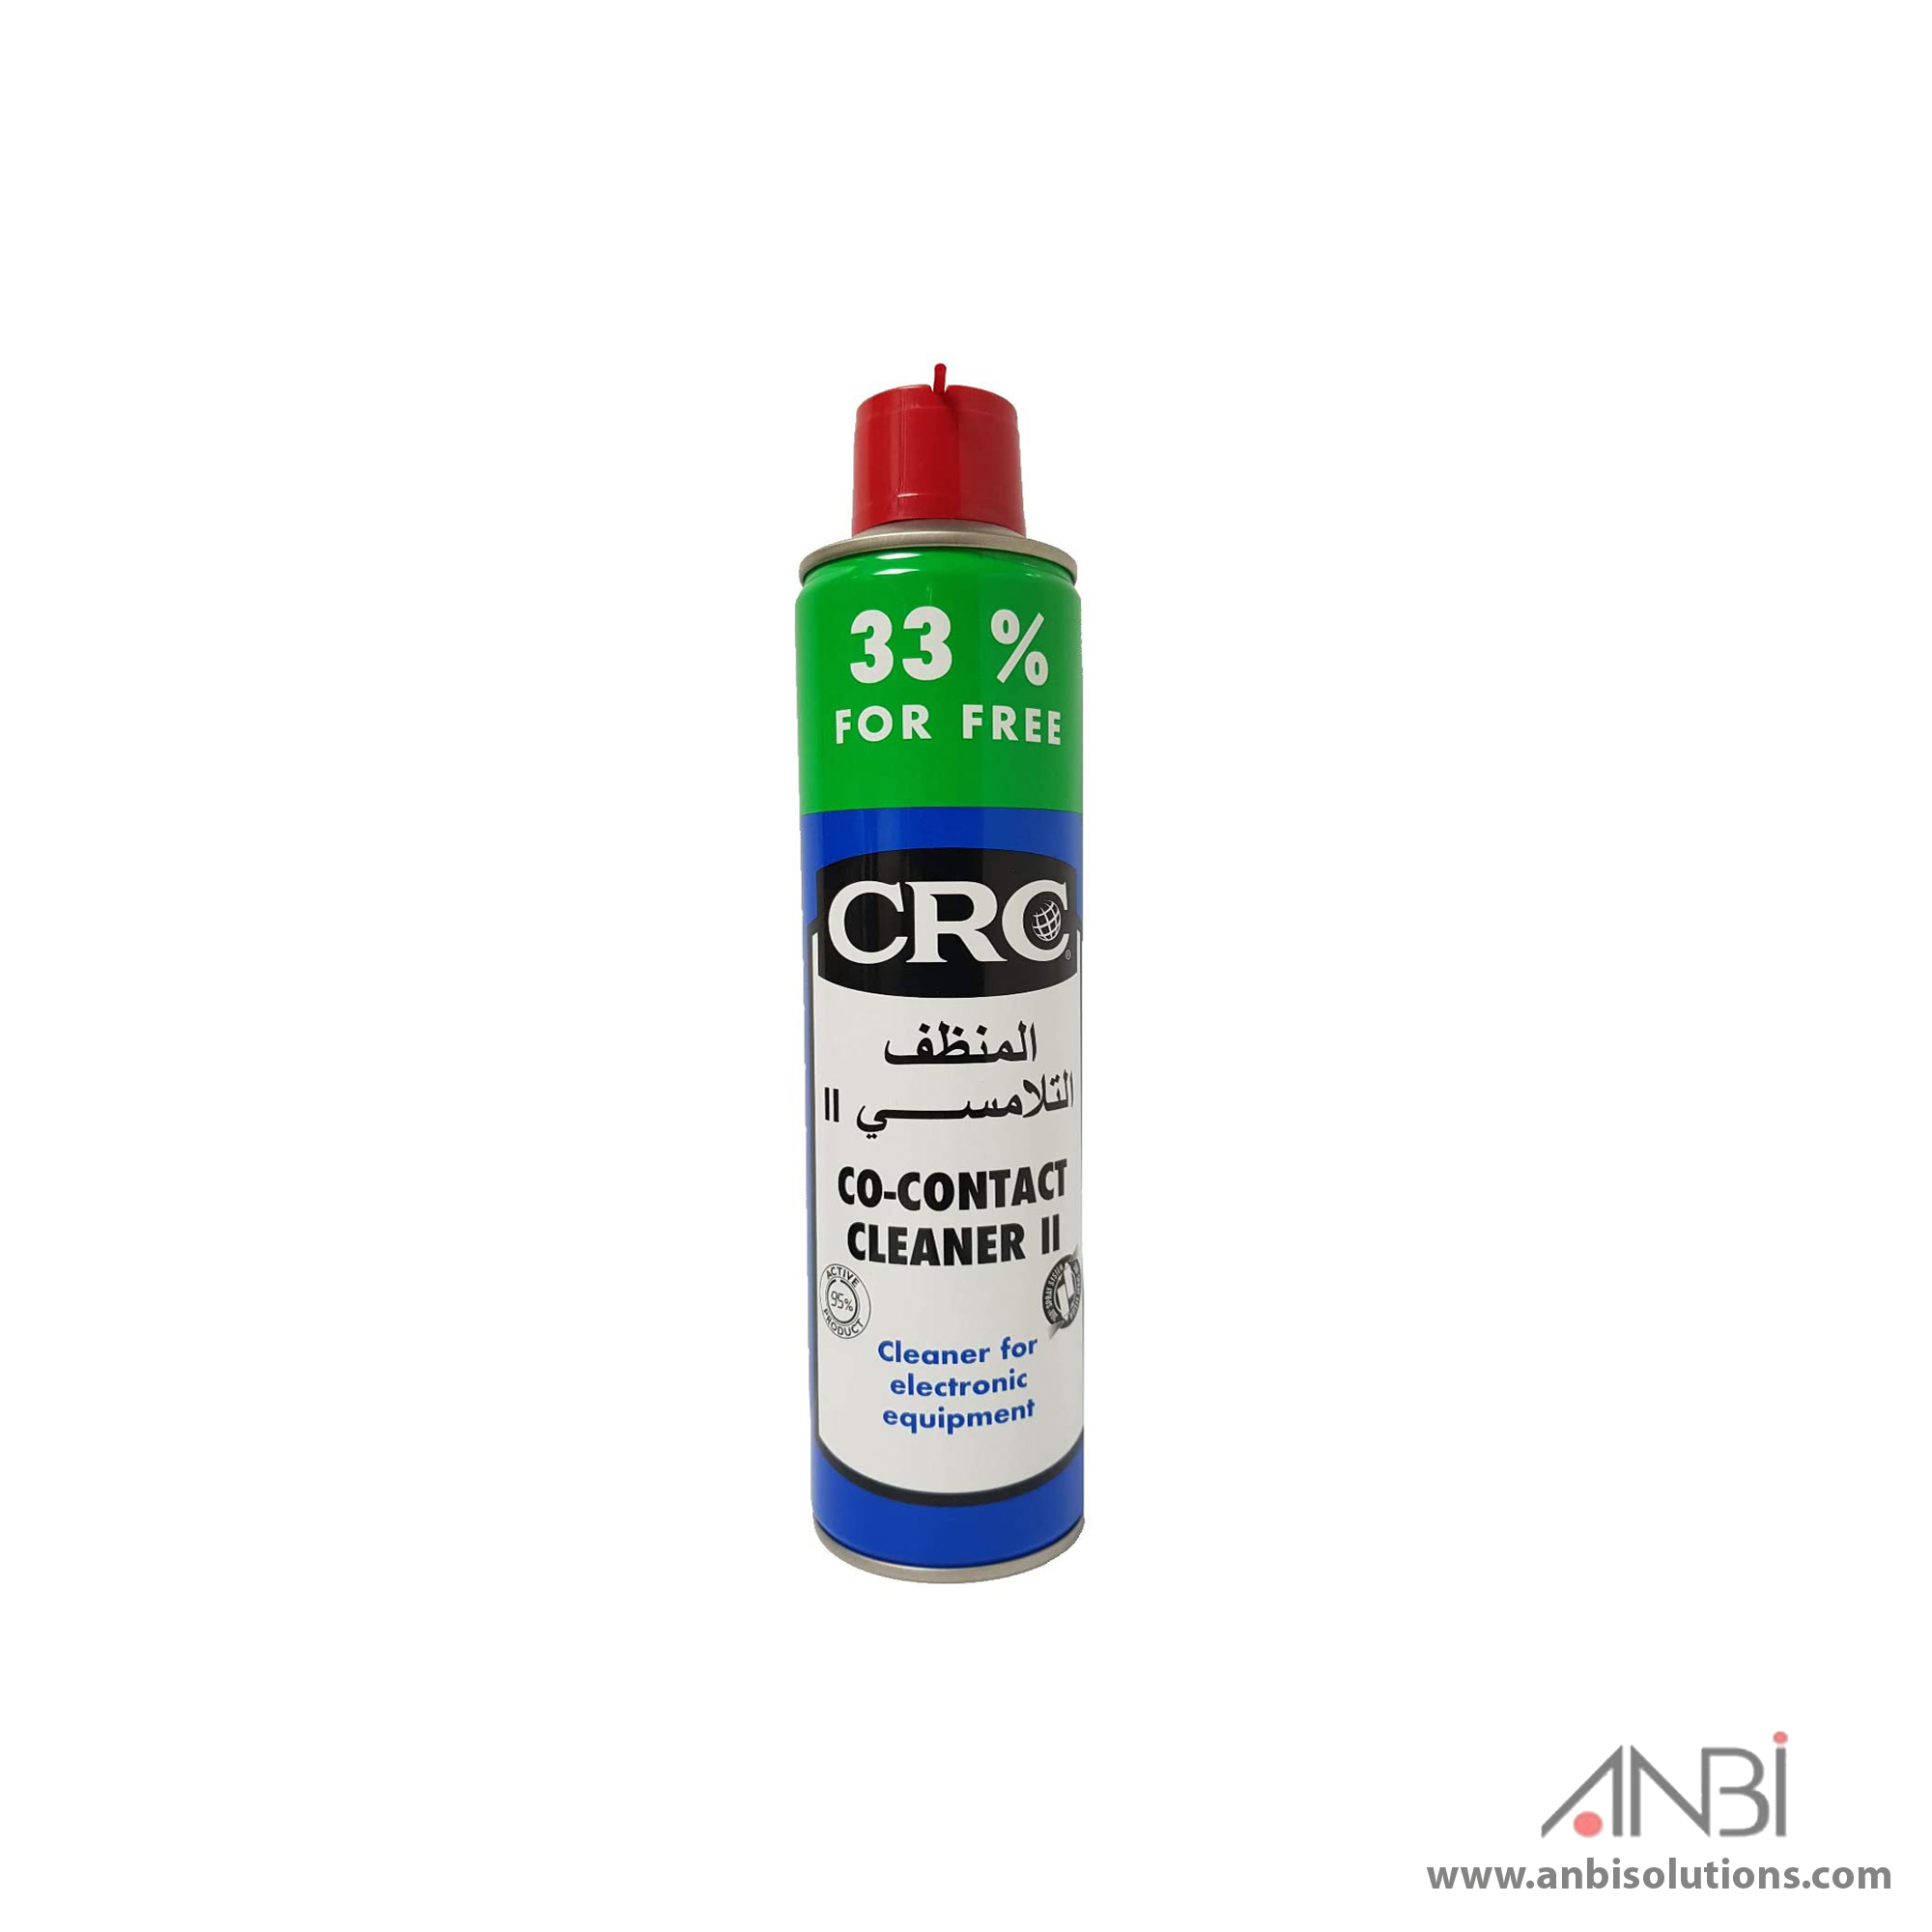 CRC Co-Contact Cleaner II 1x400ml